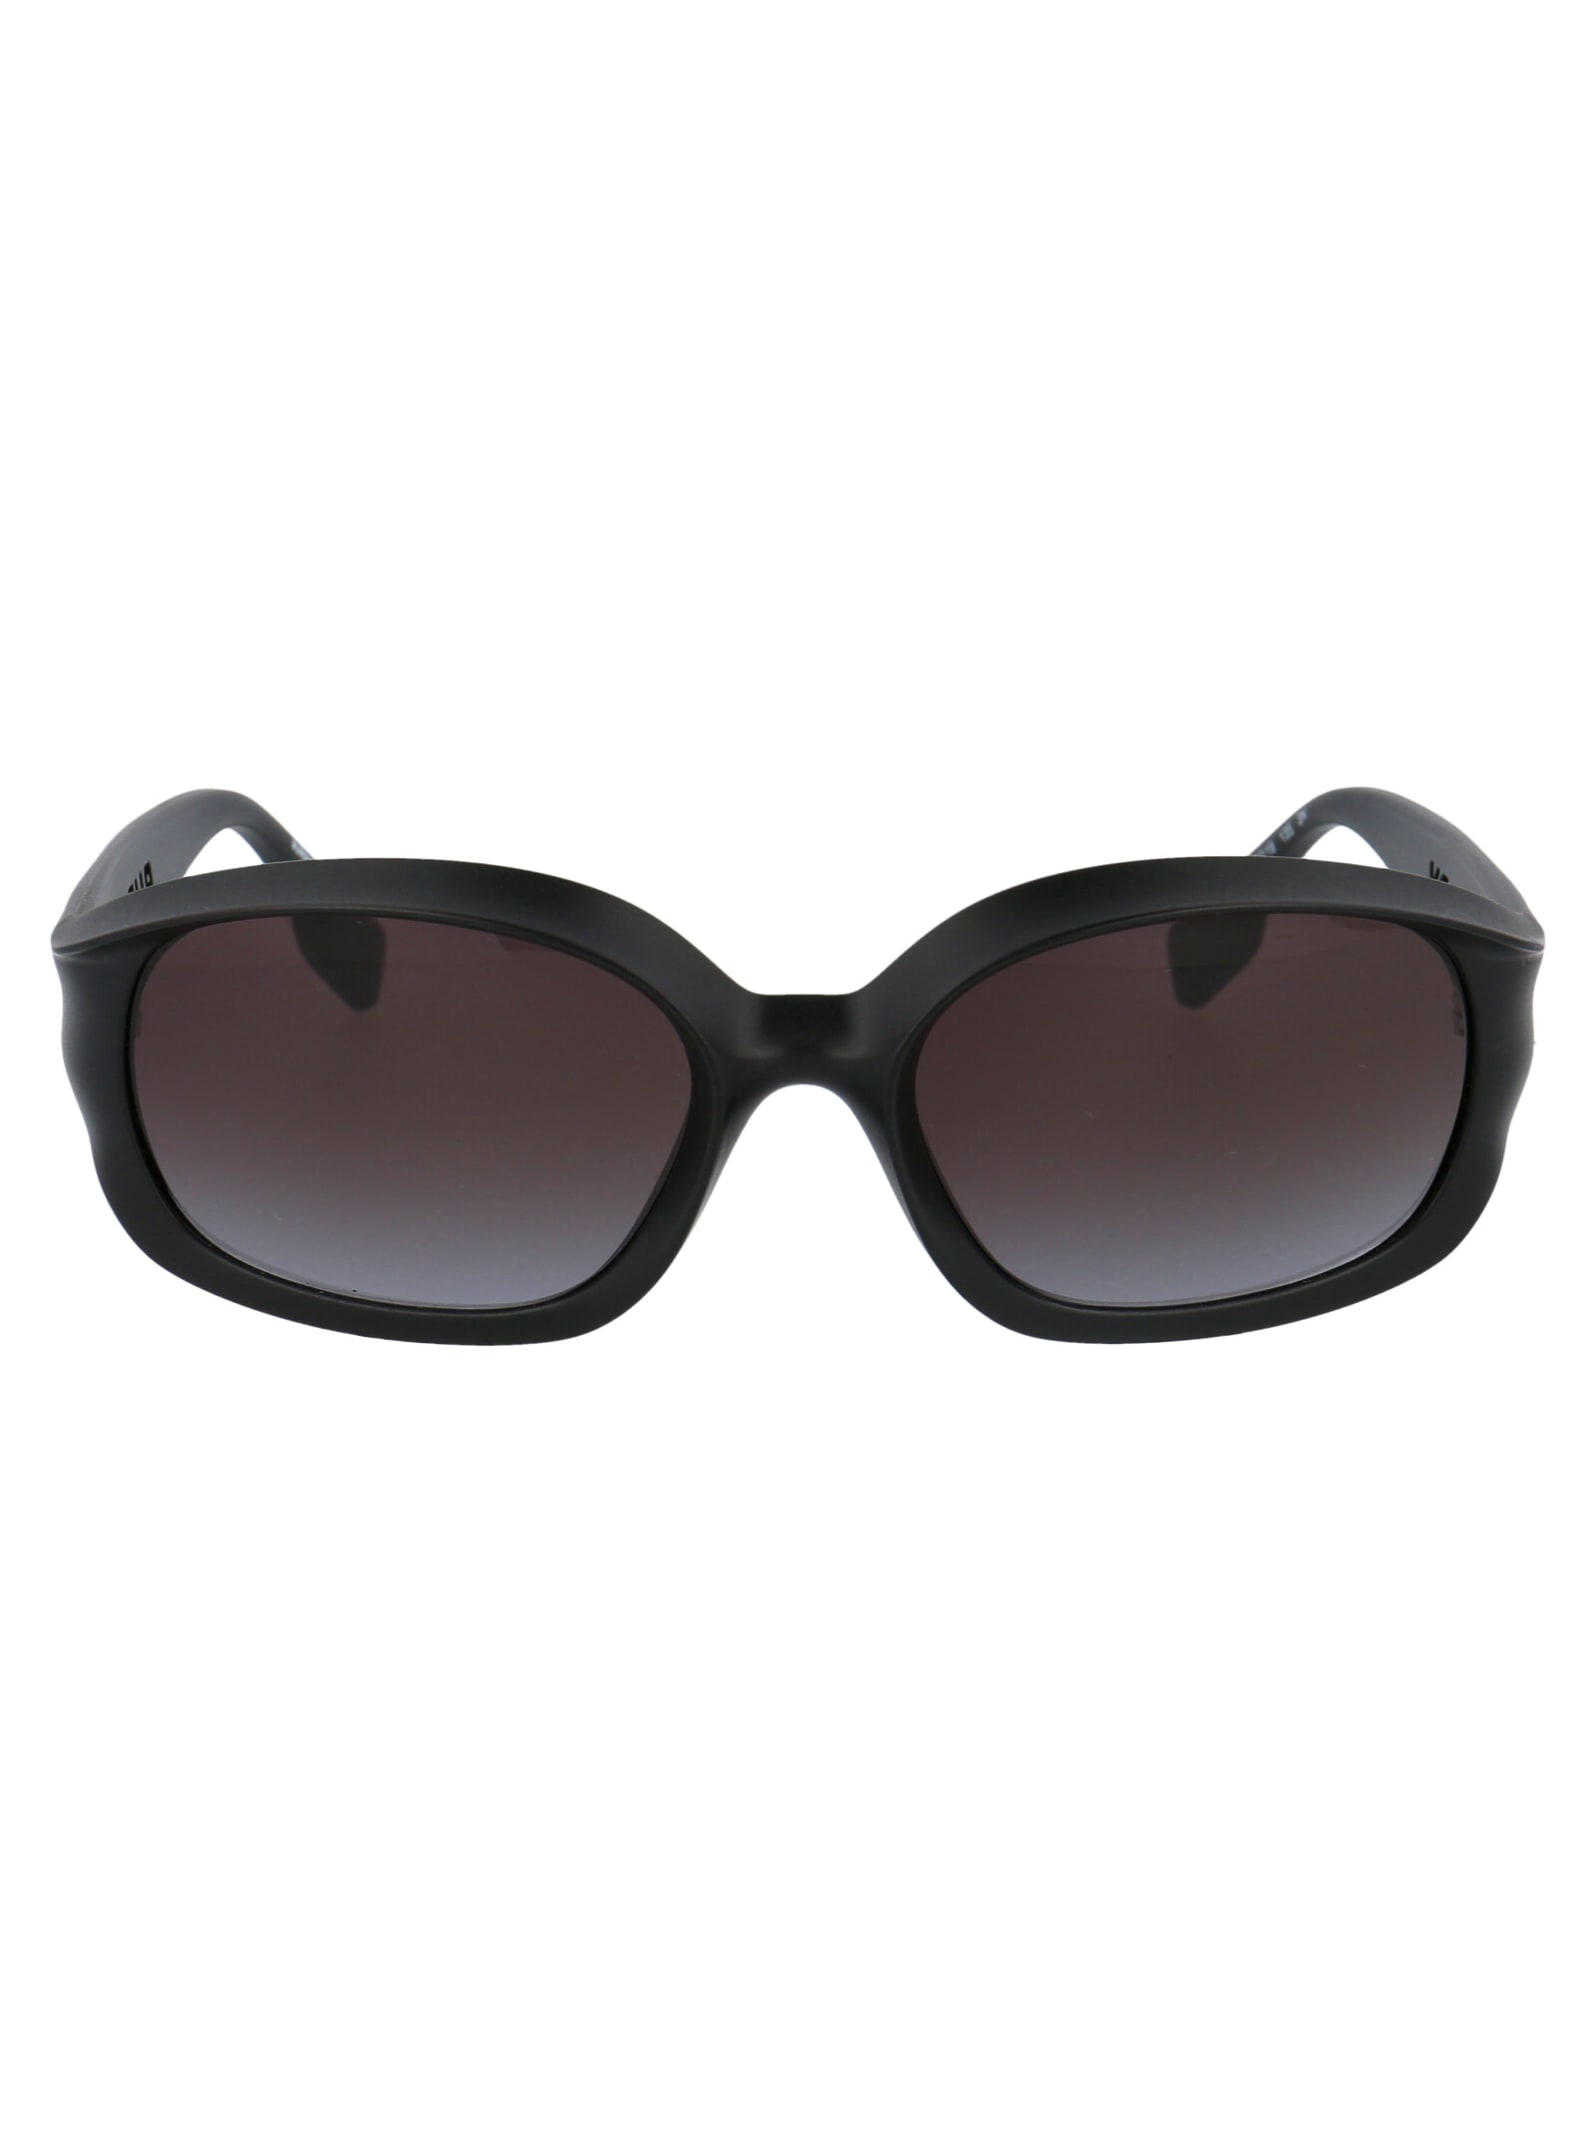 Burberry Eyewear Milton Sunglasses